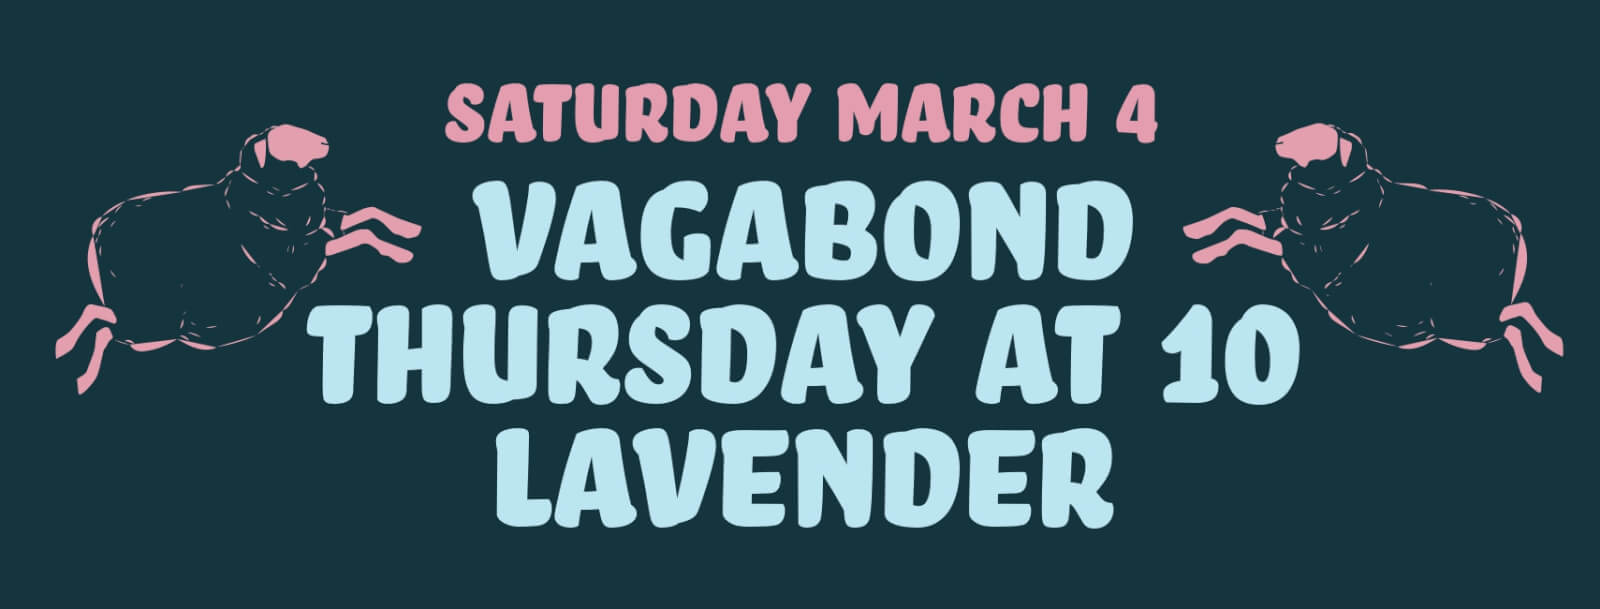 Thursday At 10, Vagabond, and Lavender: Live at The Black Sheep!